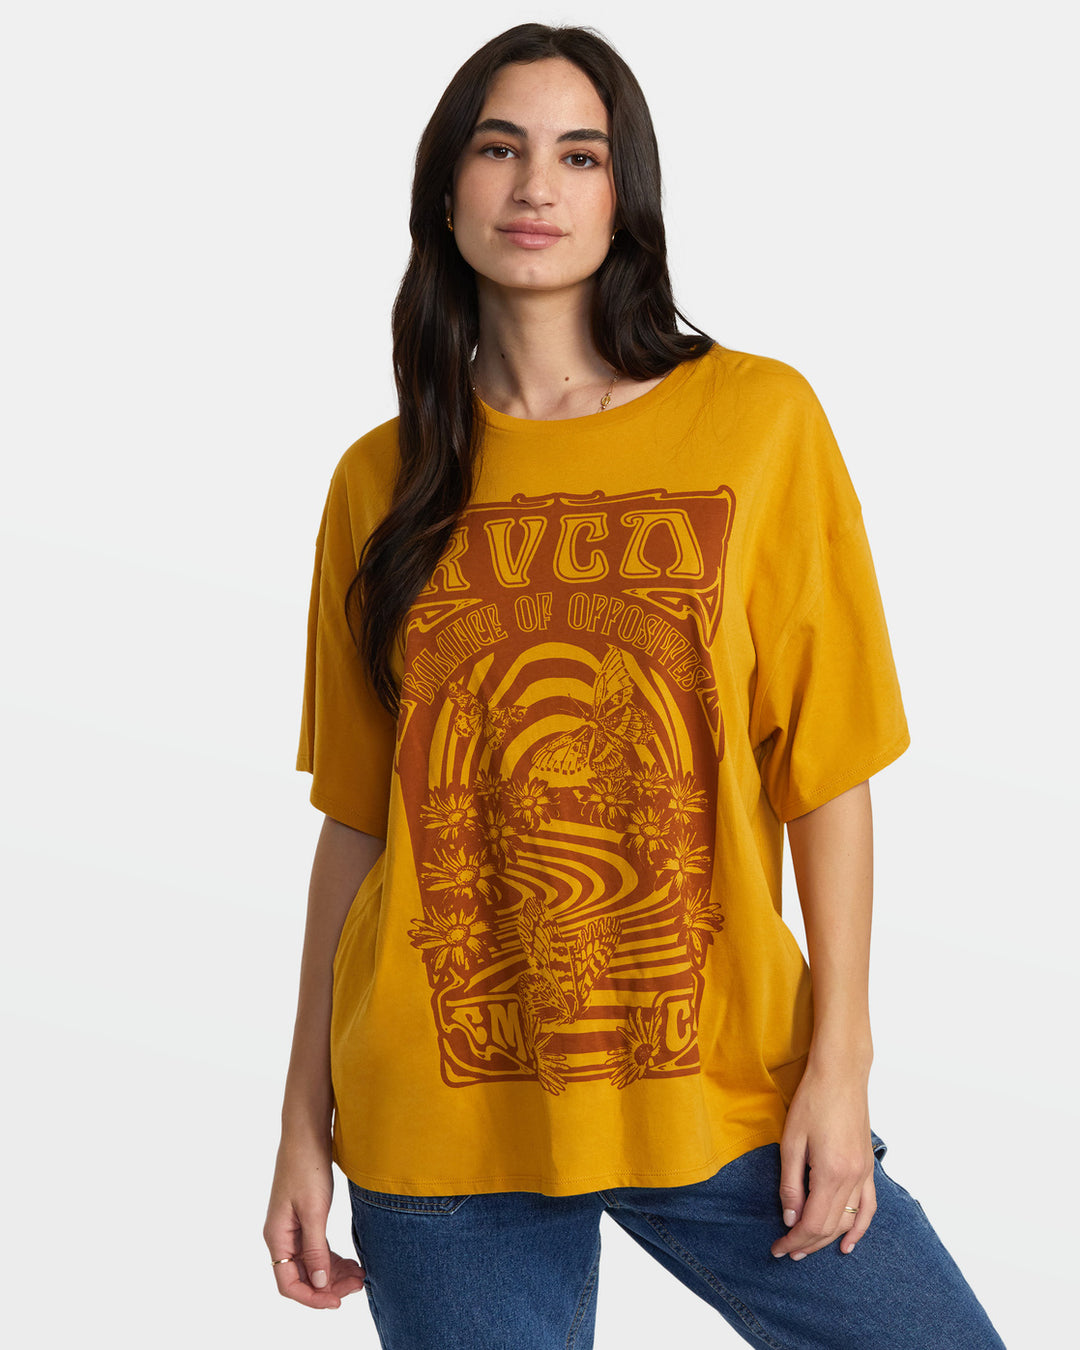 RVCA Swirl T-Shirt - Bronze - Sun Diego Boardshop